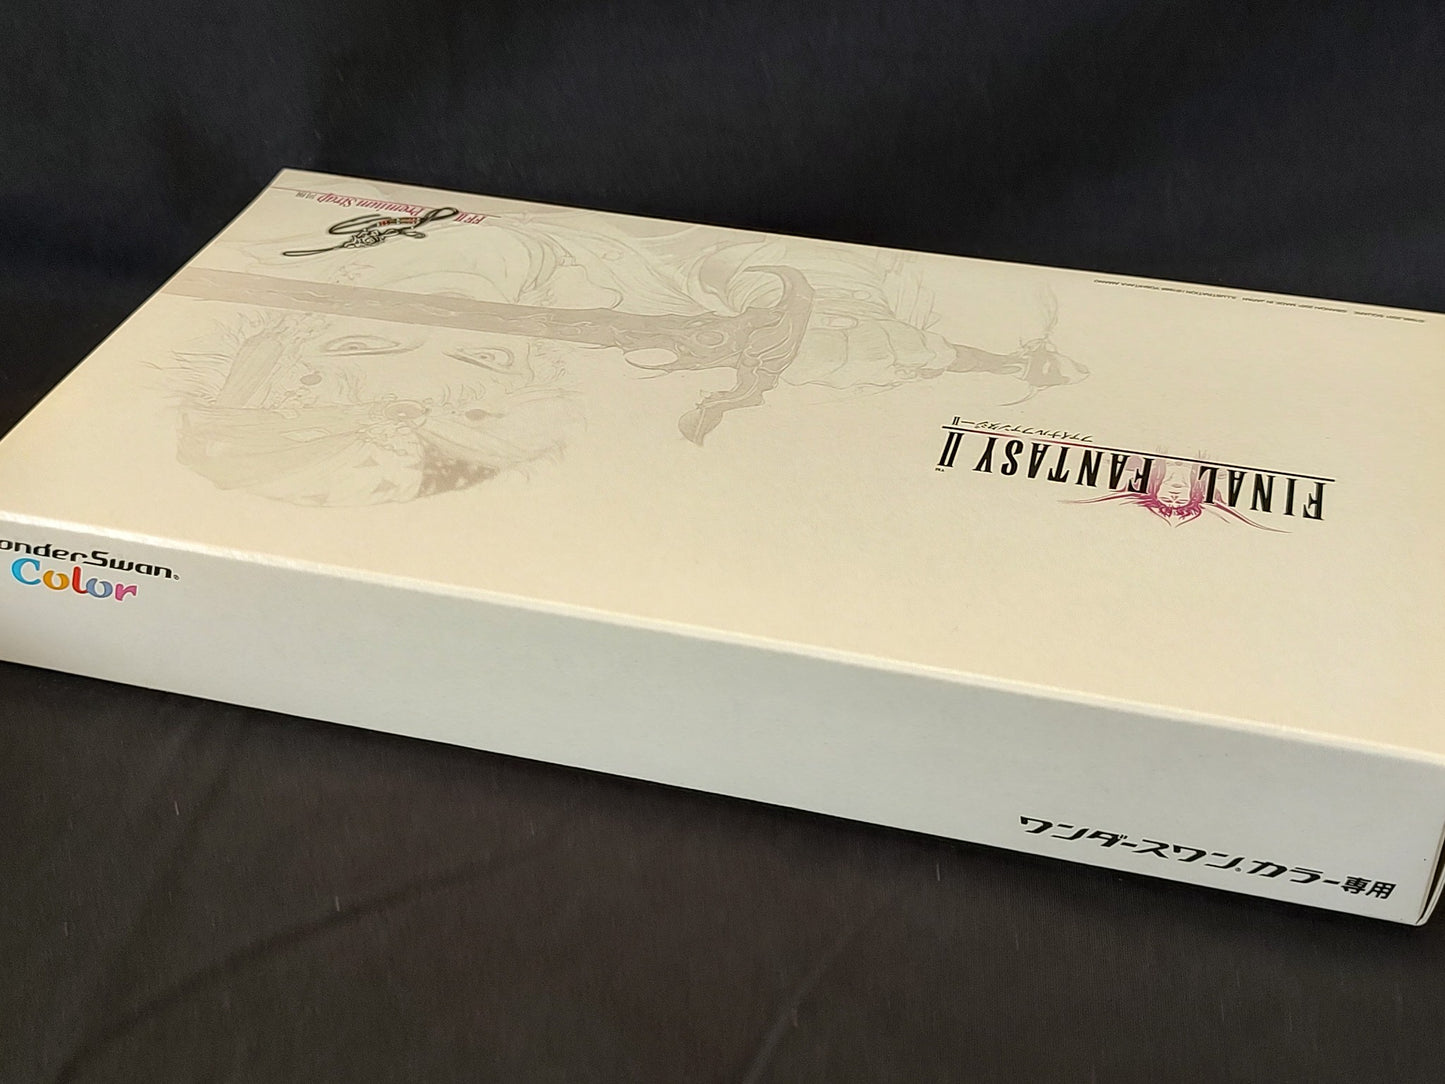 BANDAI Wonder Swan Color Final Fantasy 2 Limited model console Boxes set-g0208-